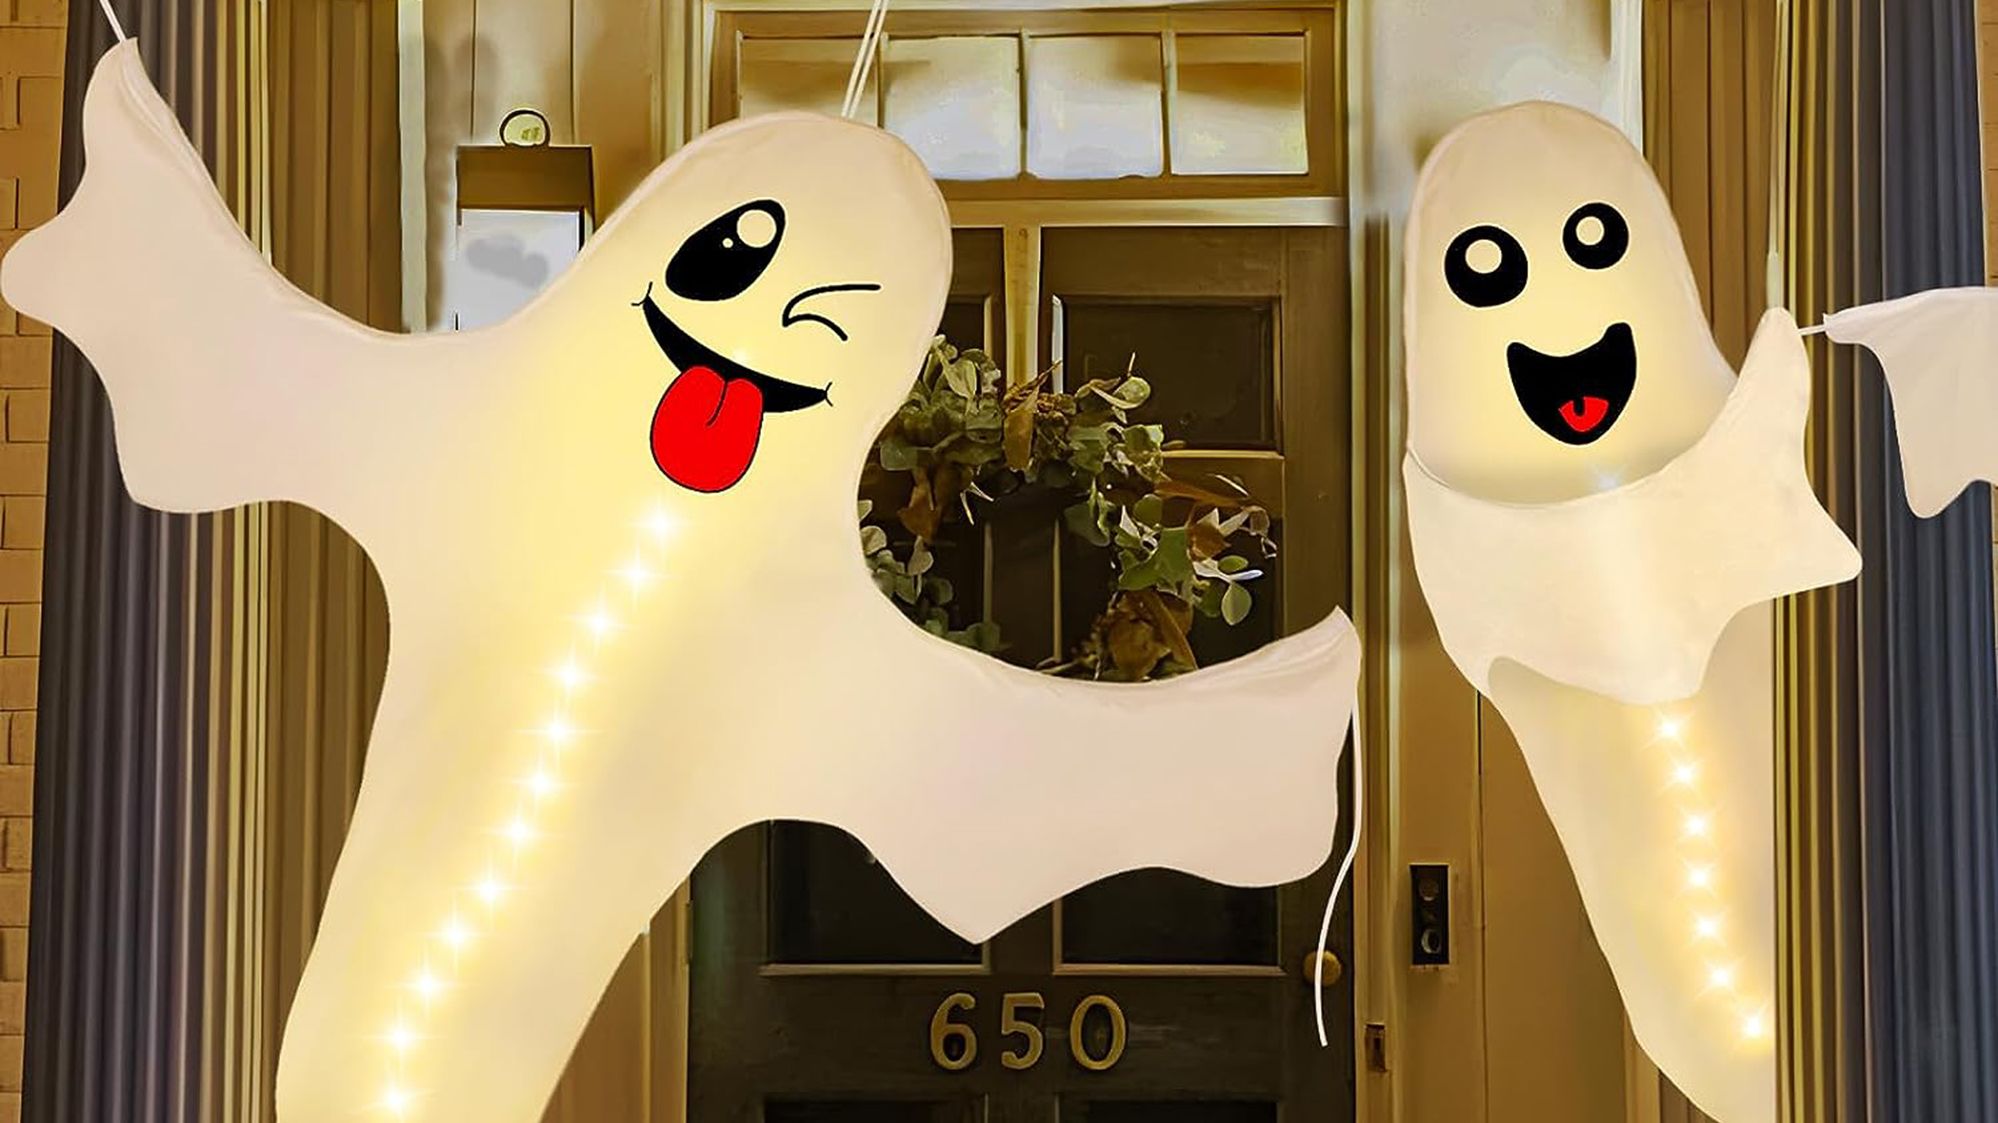 46 DIY Outdoor Halloween Decorations to Add Seasonal Spookiness